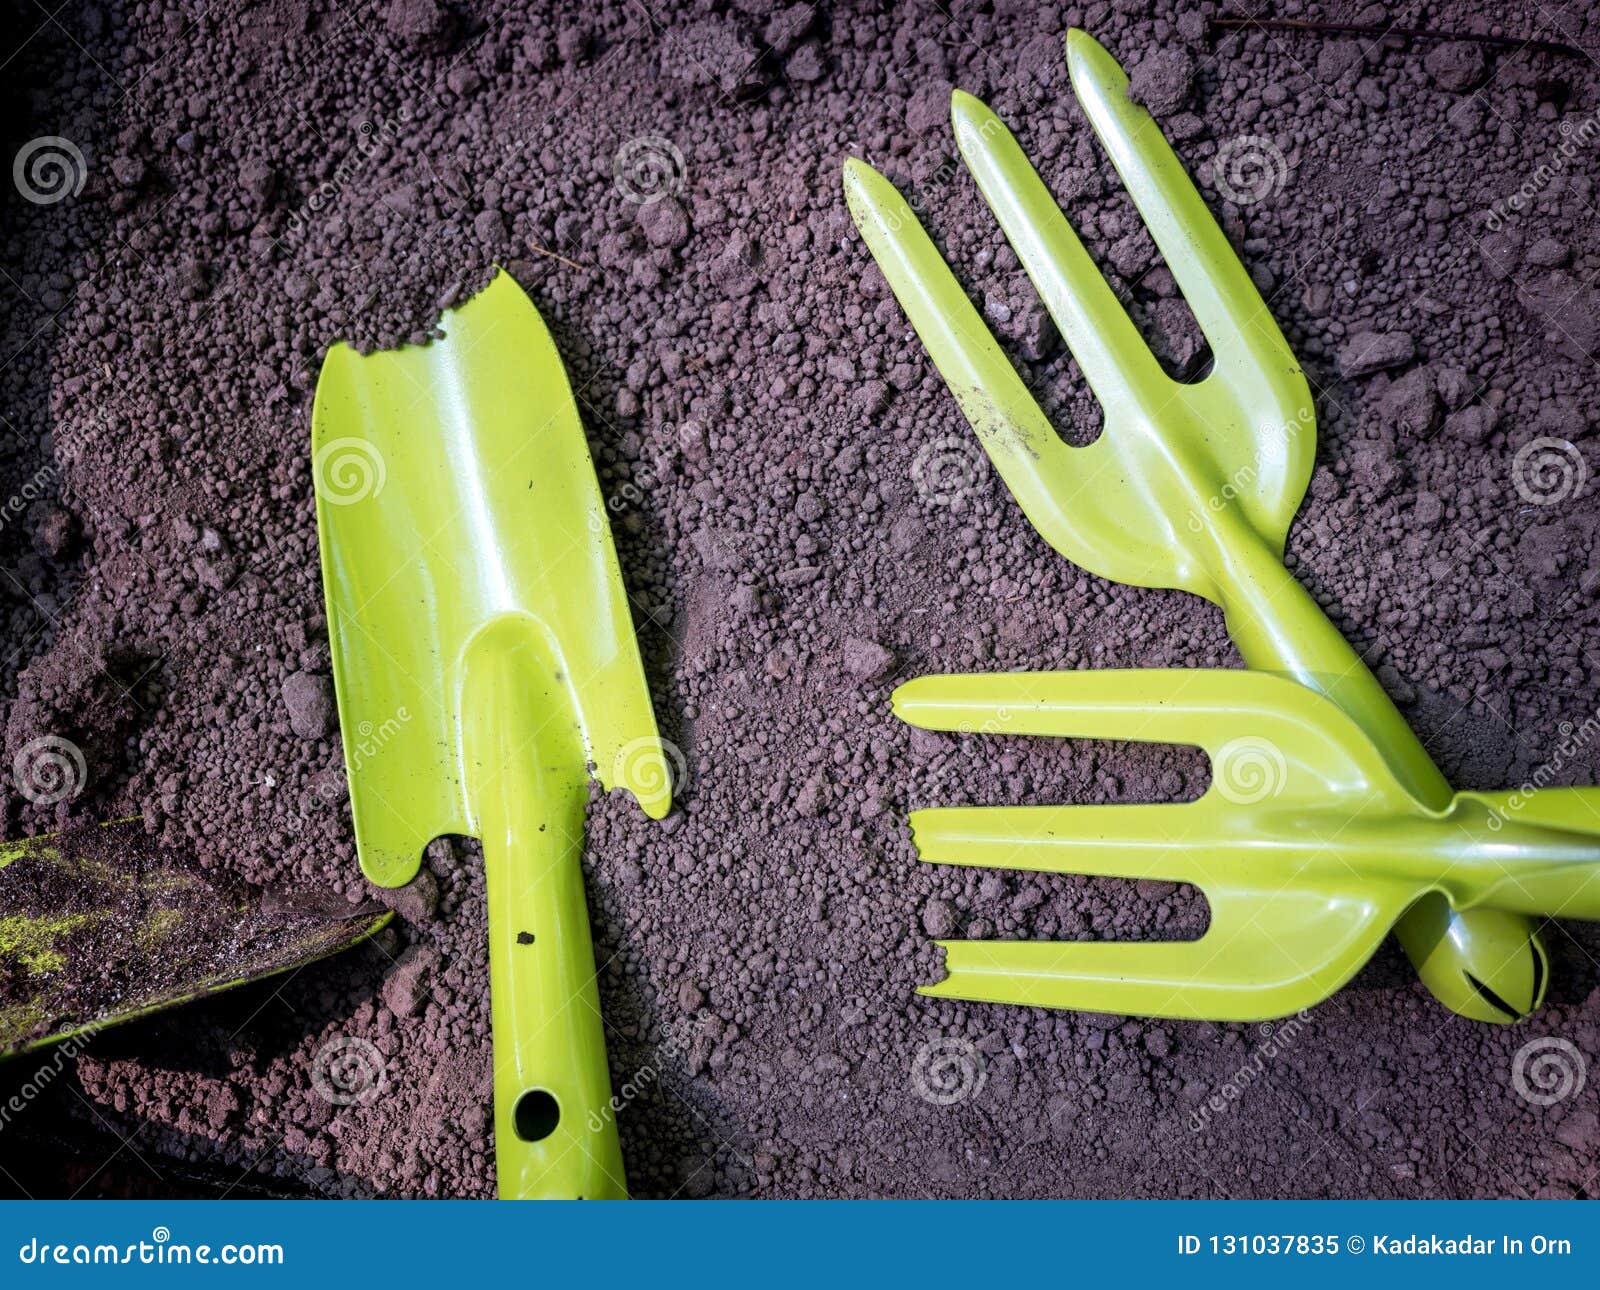 Gardening Tools on Fertile Soil Texture Background Stock Image - Image ...